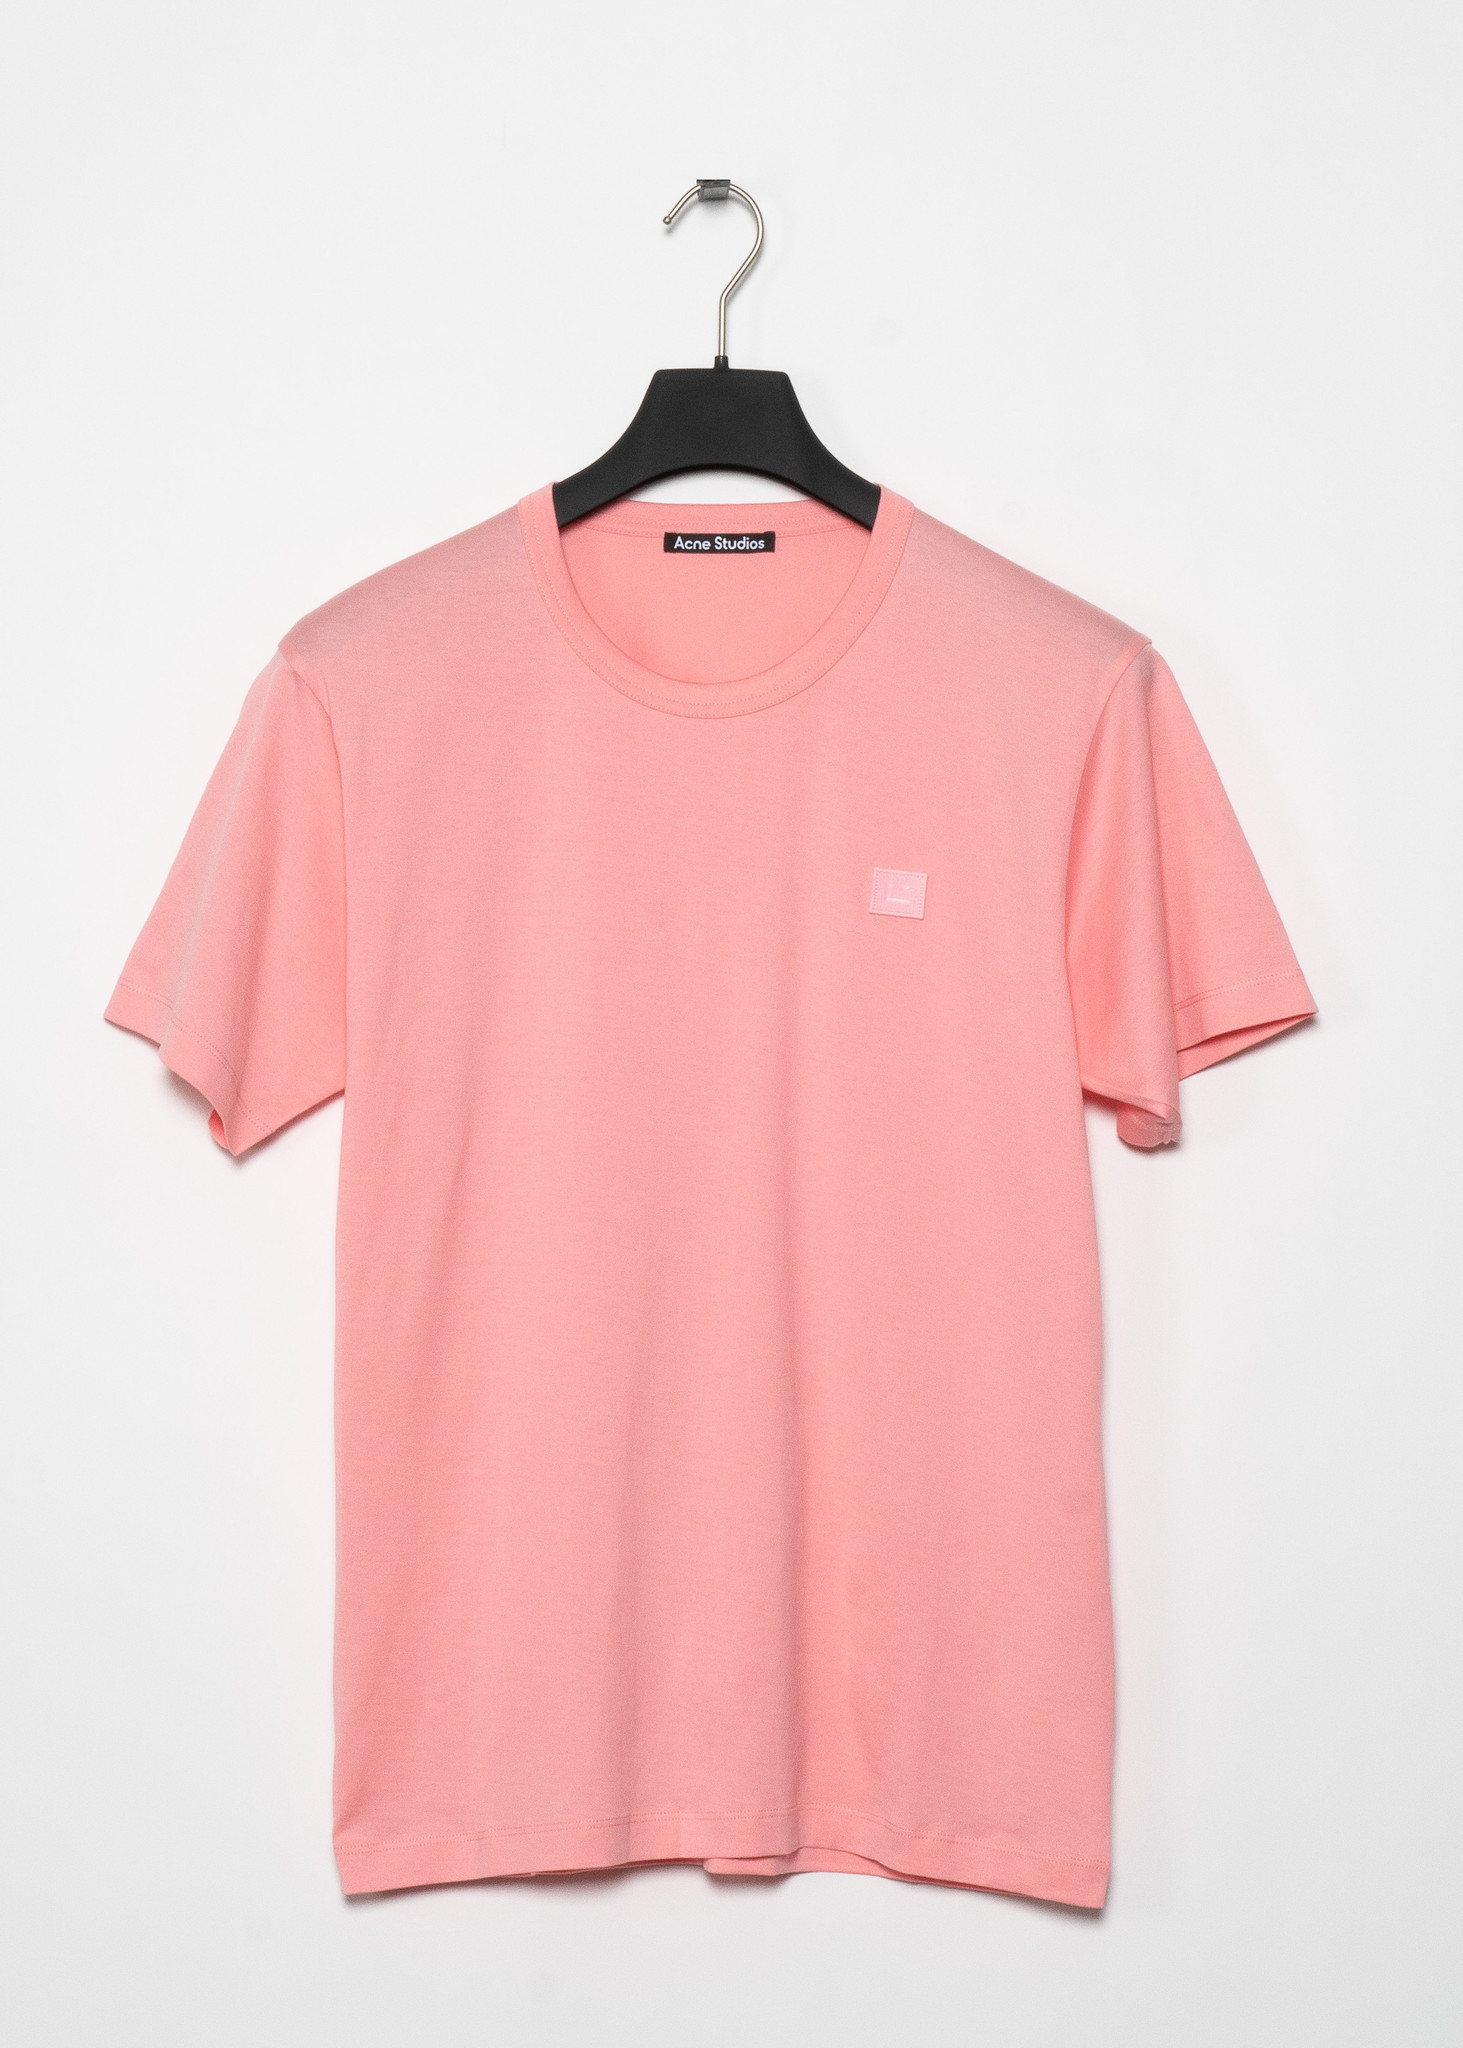 Blush Pink Crewneck T-Shirt